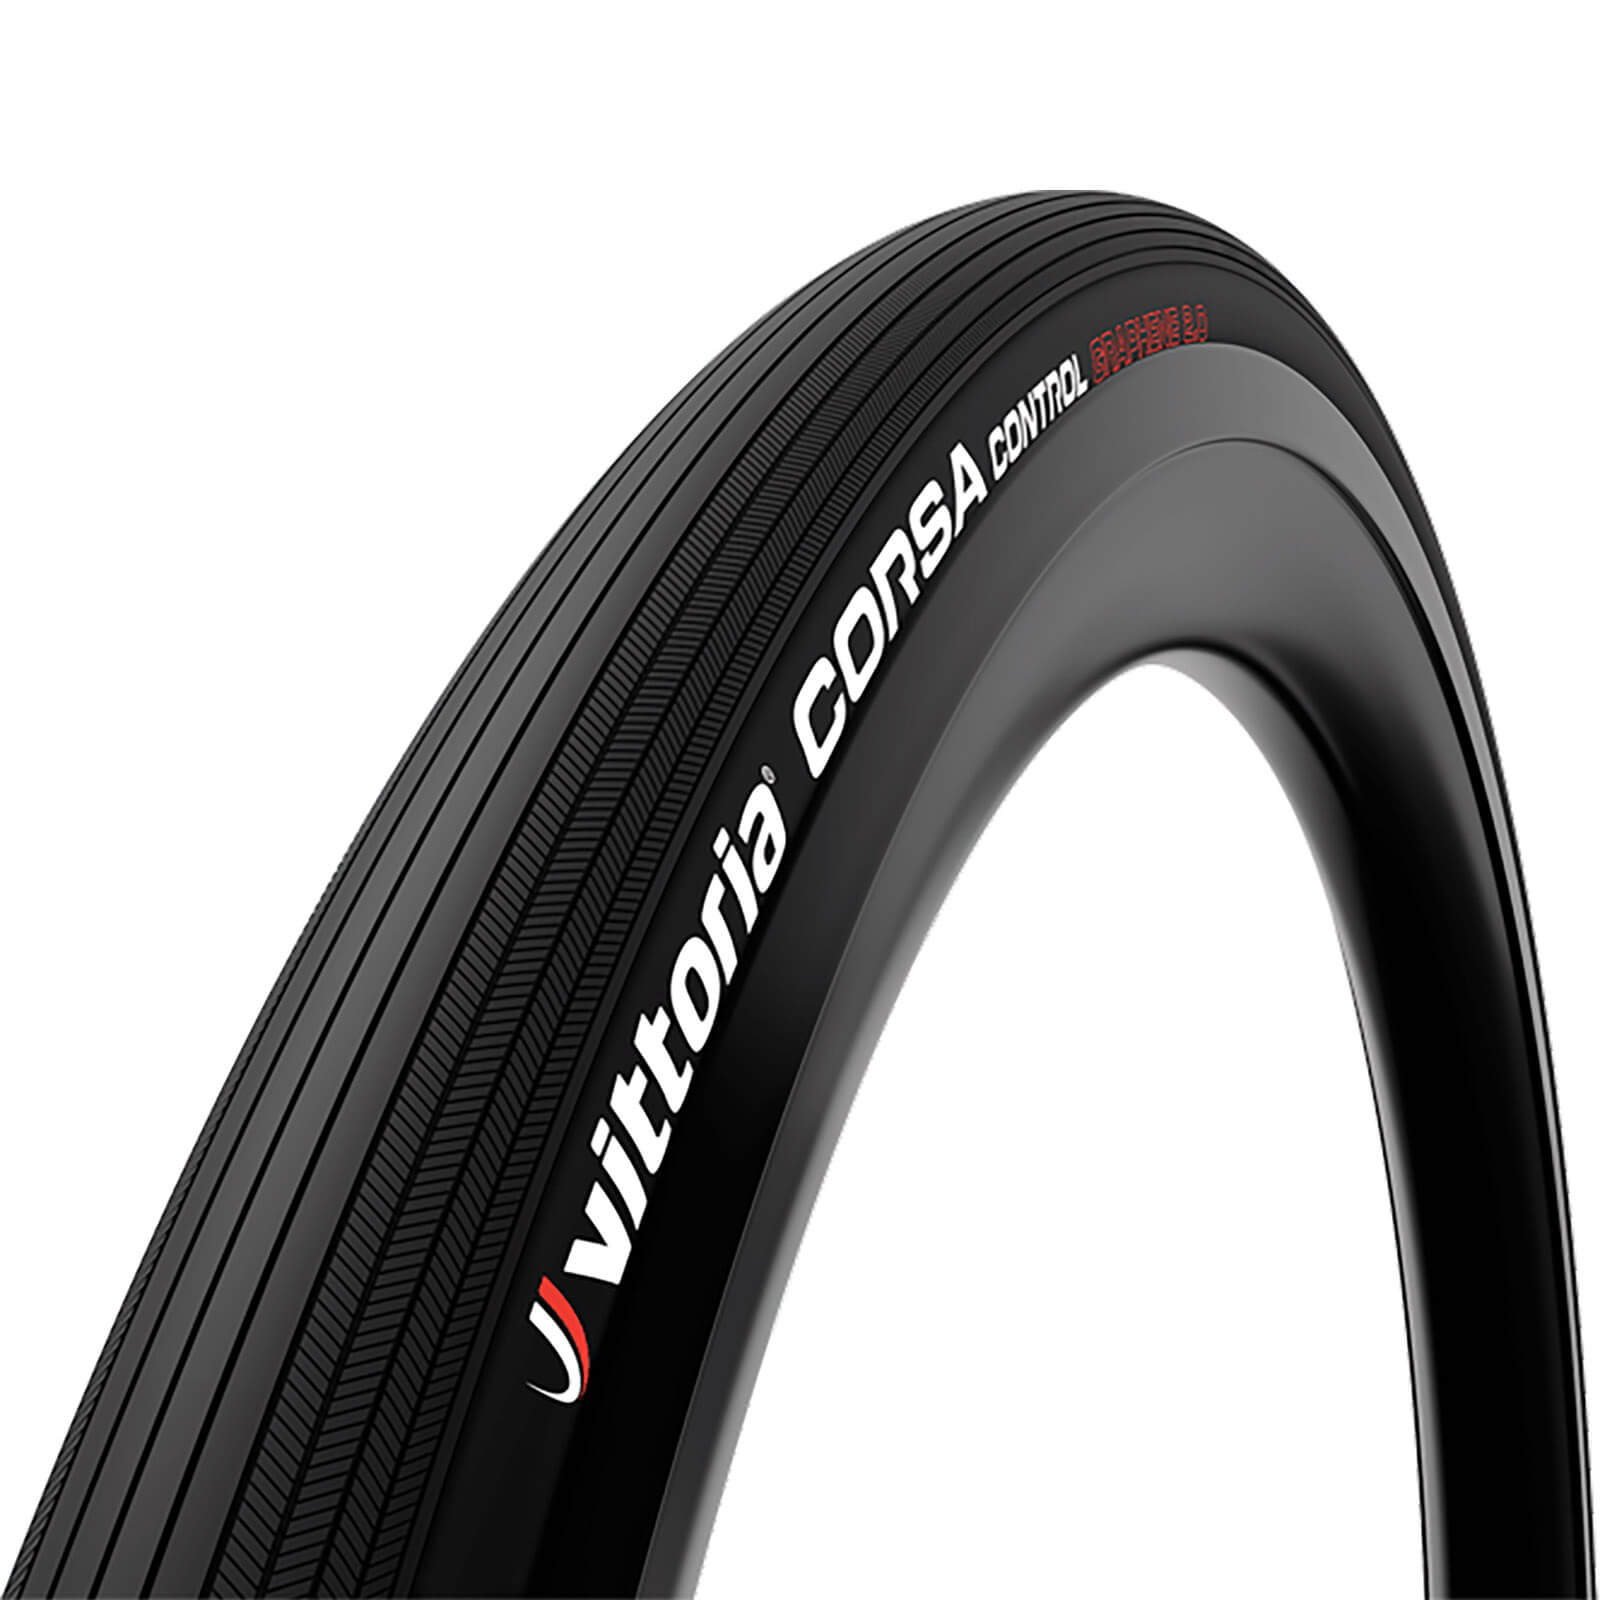 Vittoria Corsa Control G2.0 Tubular Road Tyre - 700x25mm - Full Black